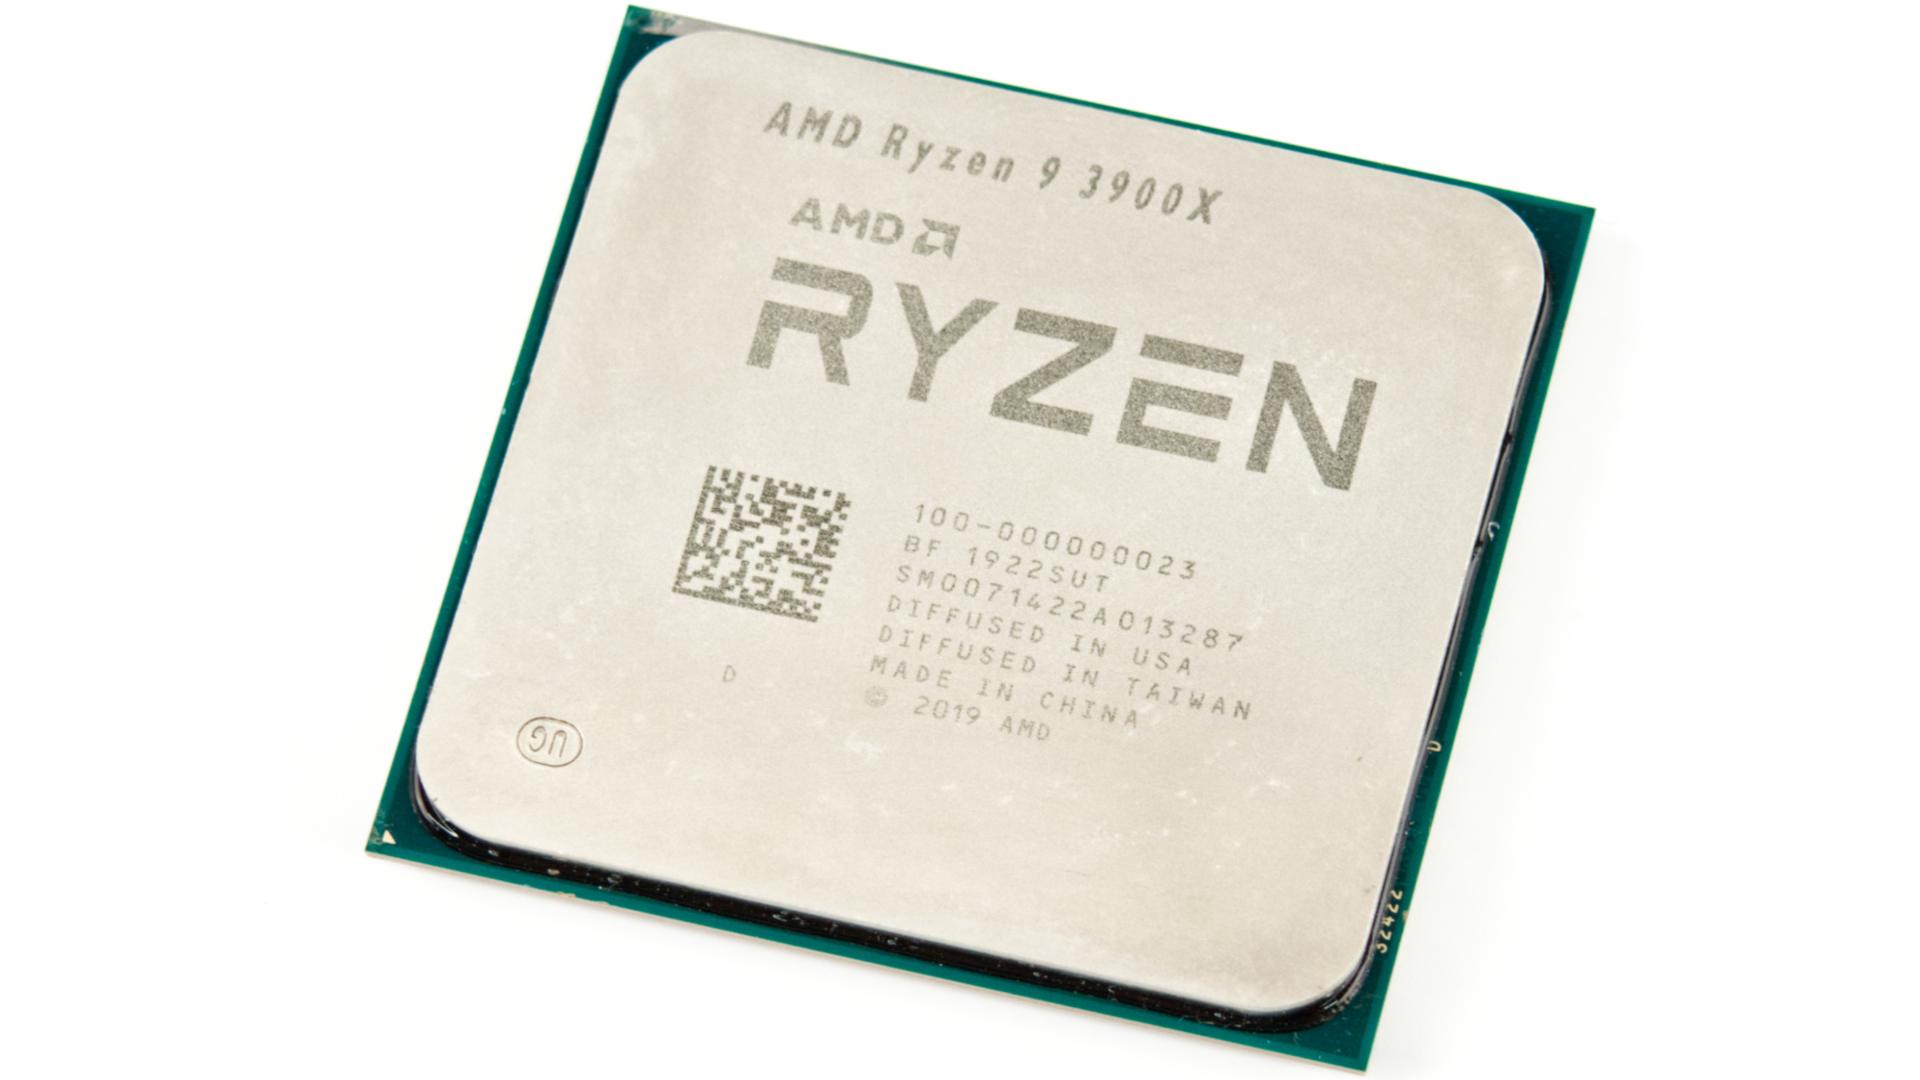 AMD Ryzen 9 3900X 3